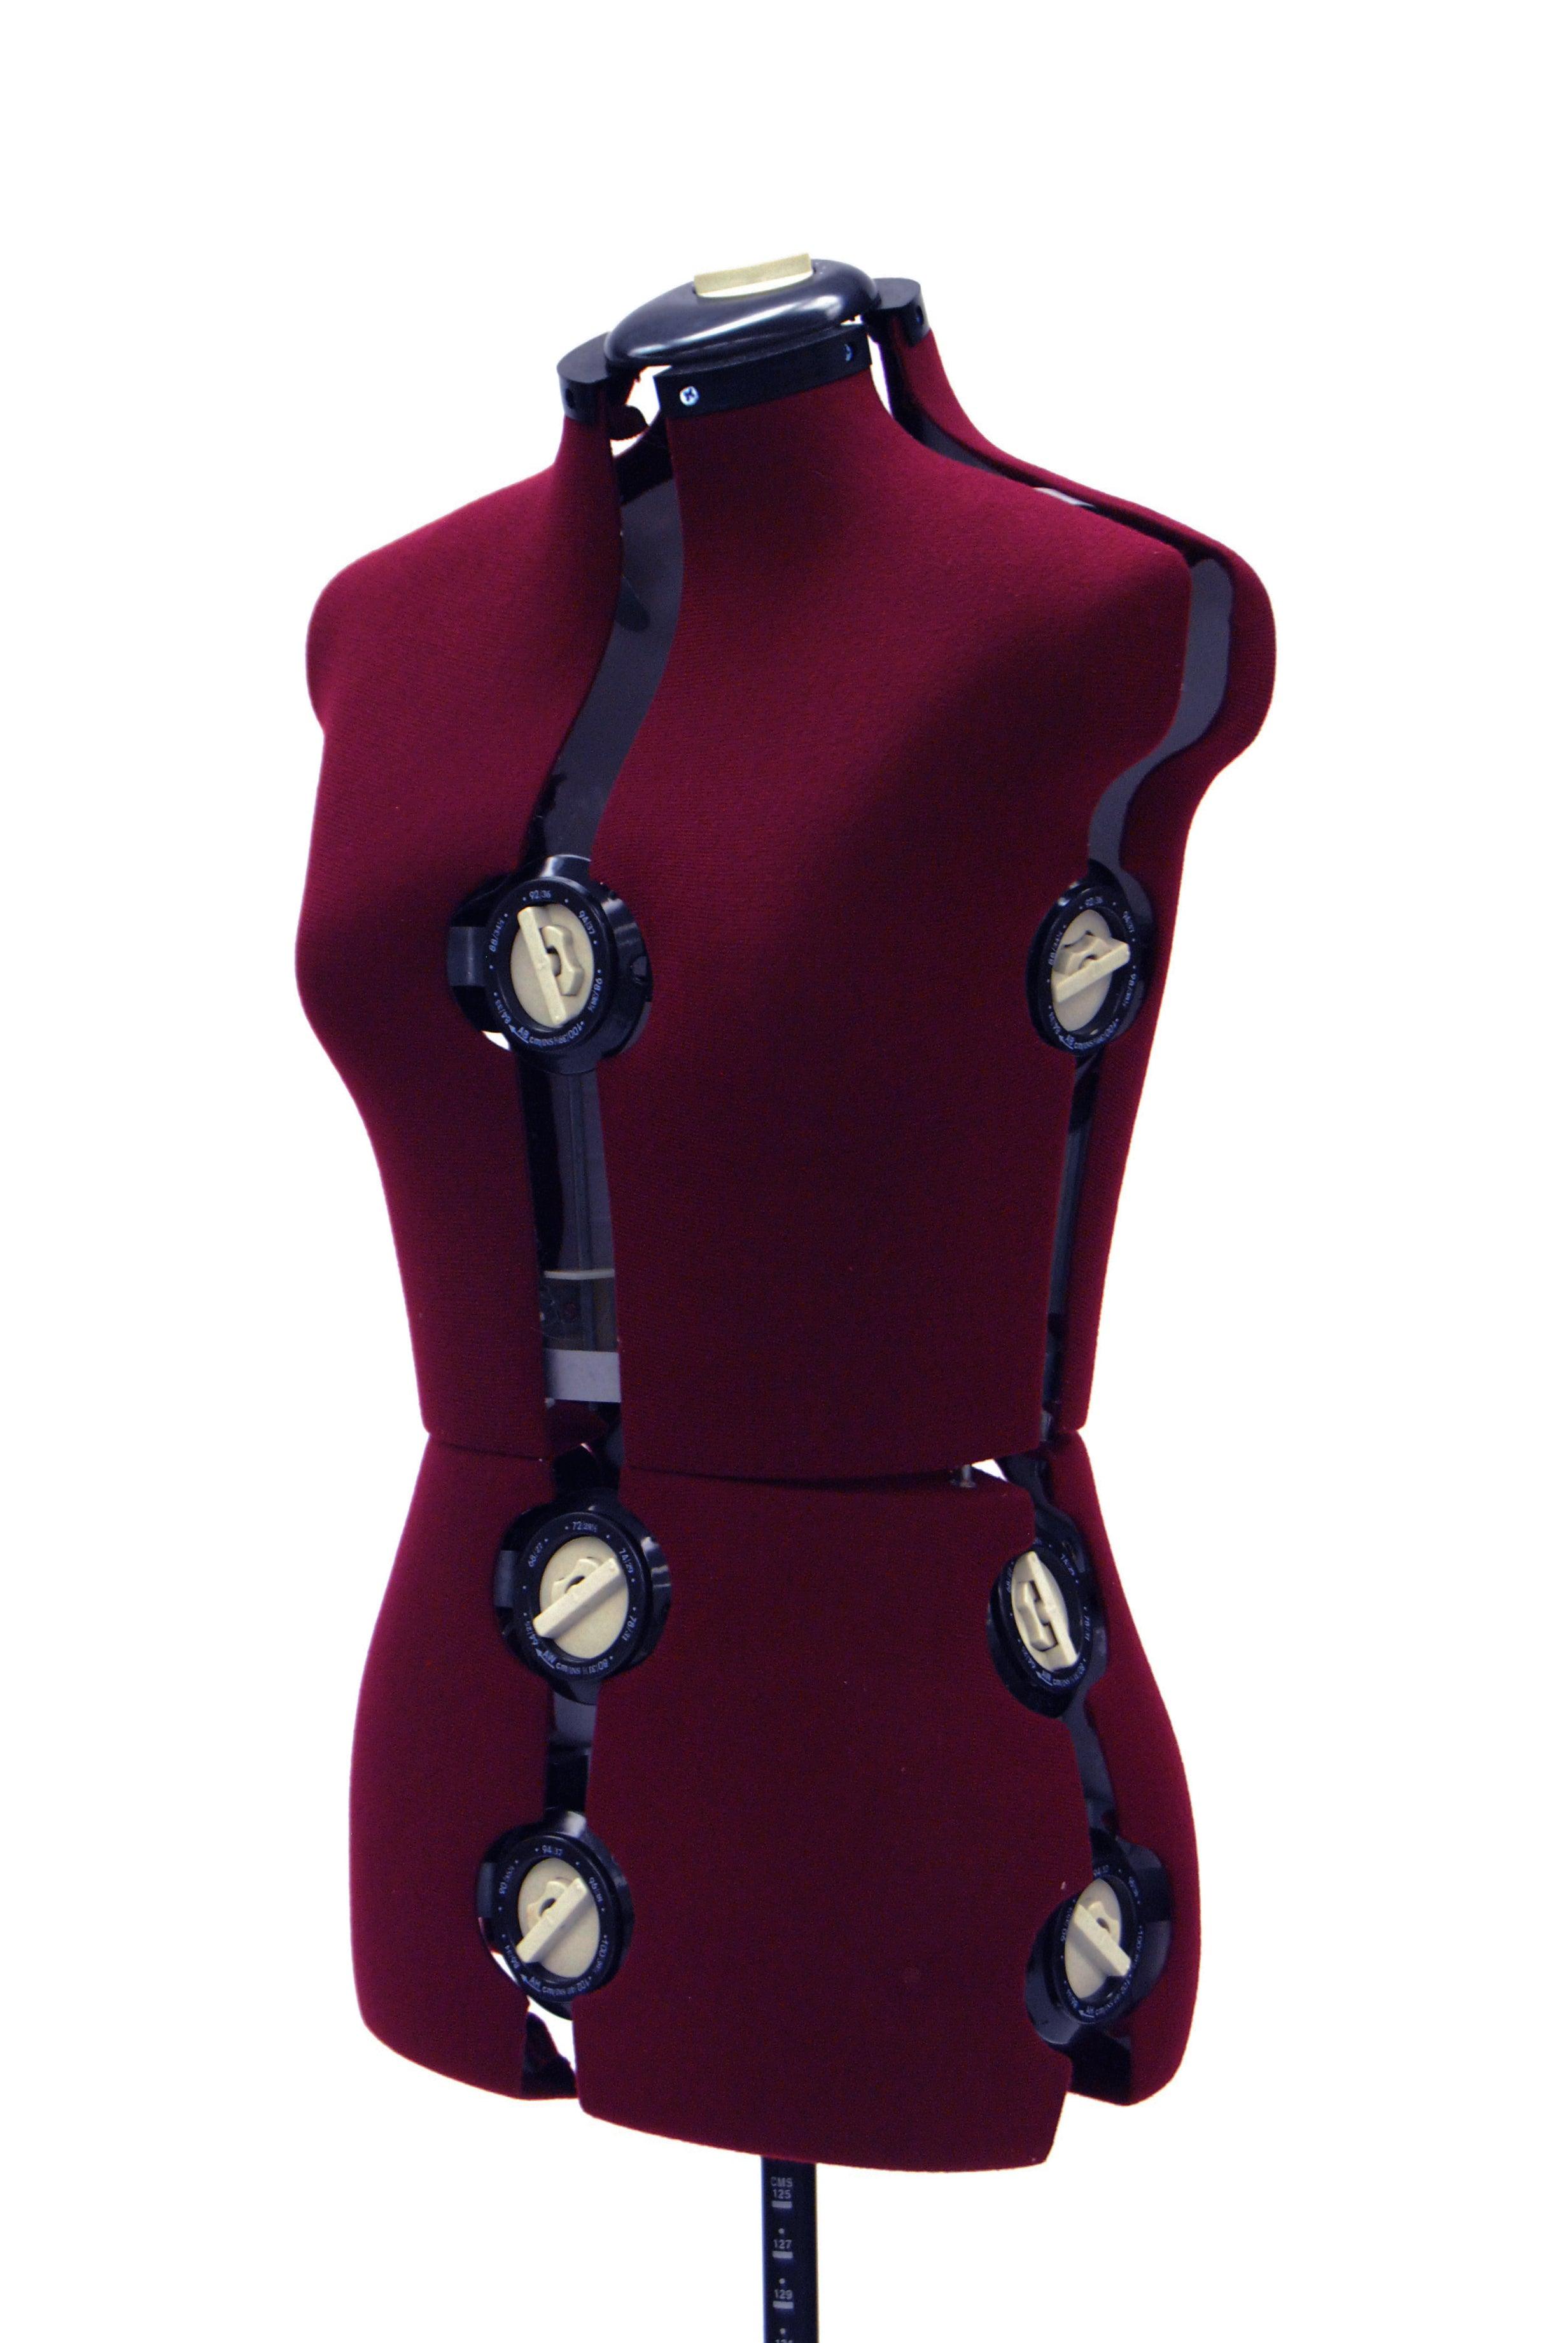 Adjustable Dress Forms in Dress Forms & Mannequins 